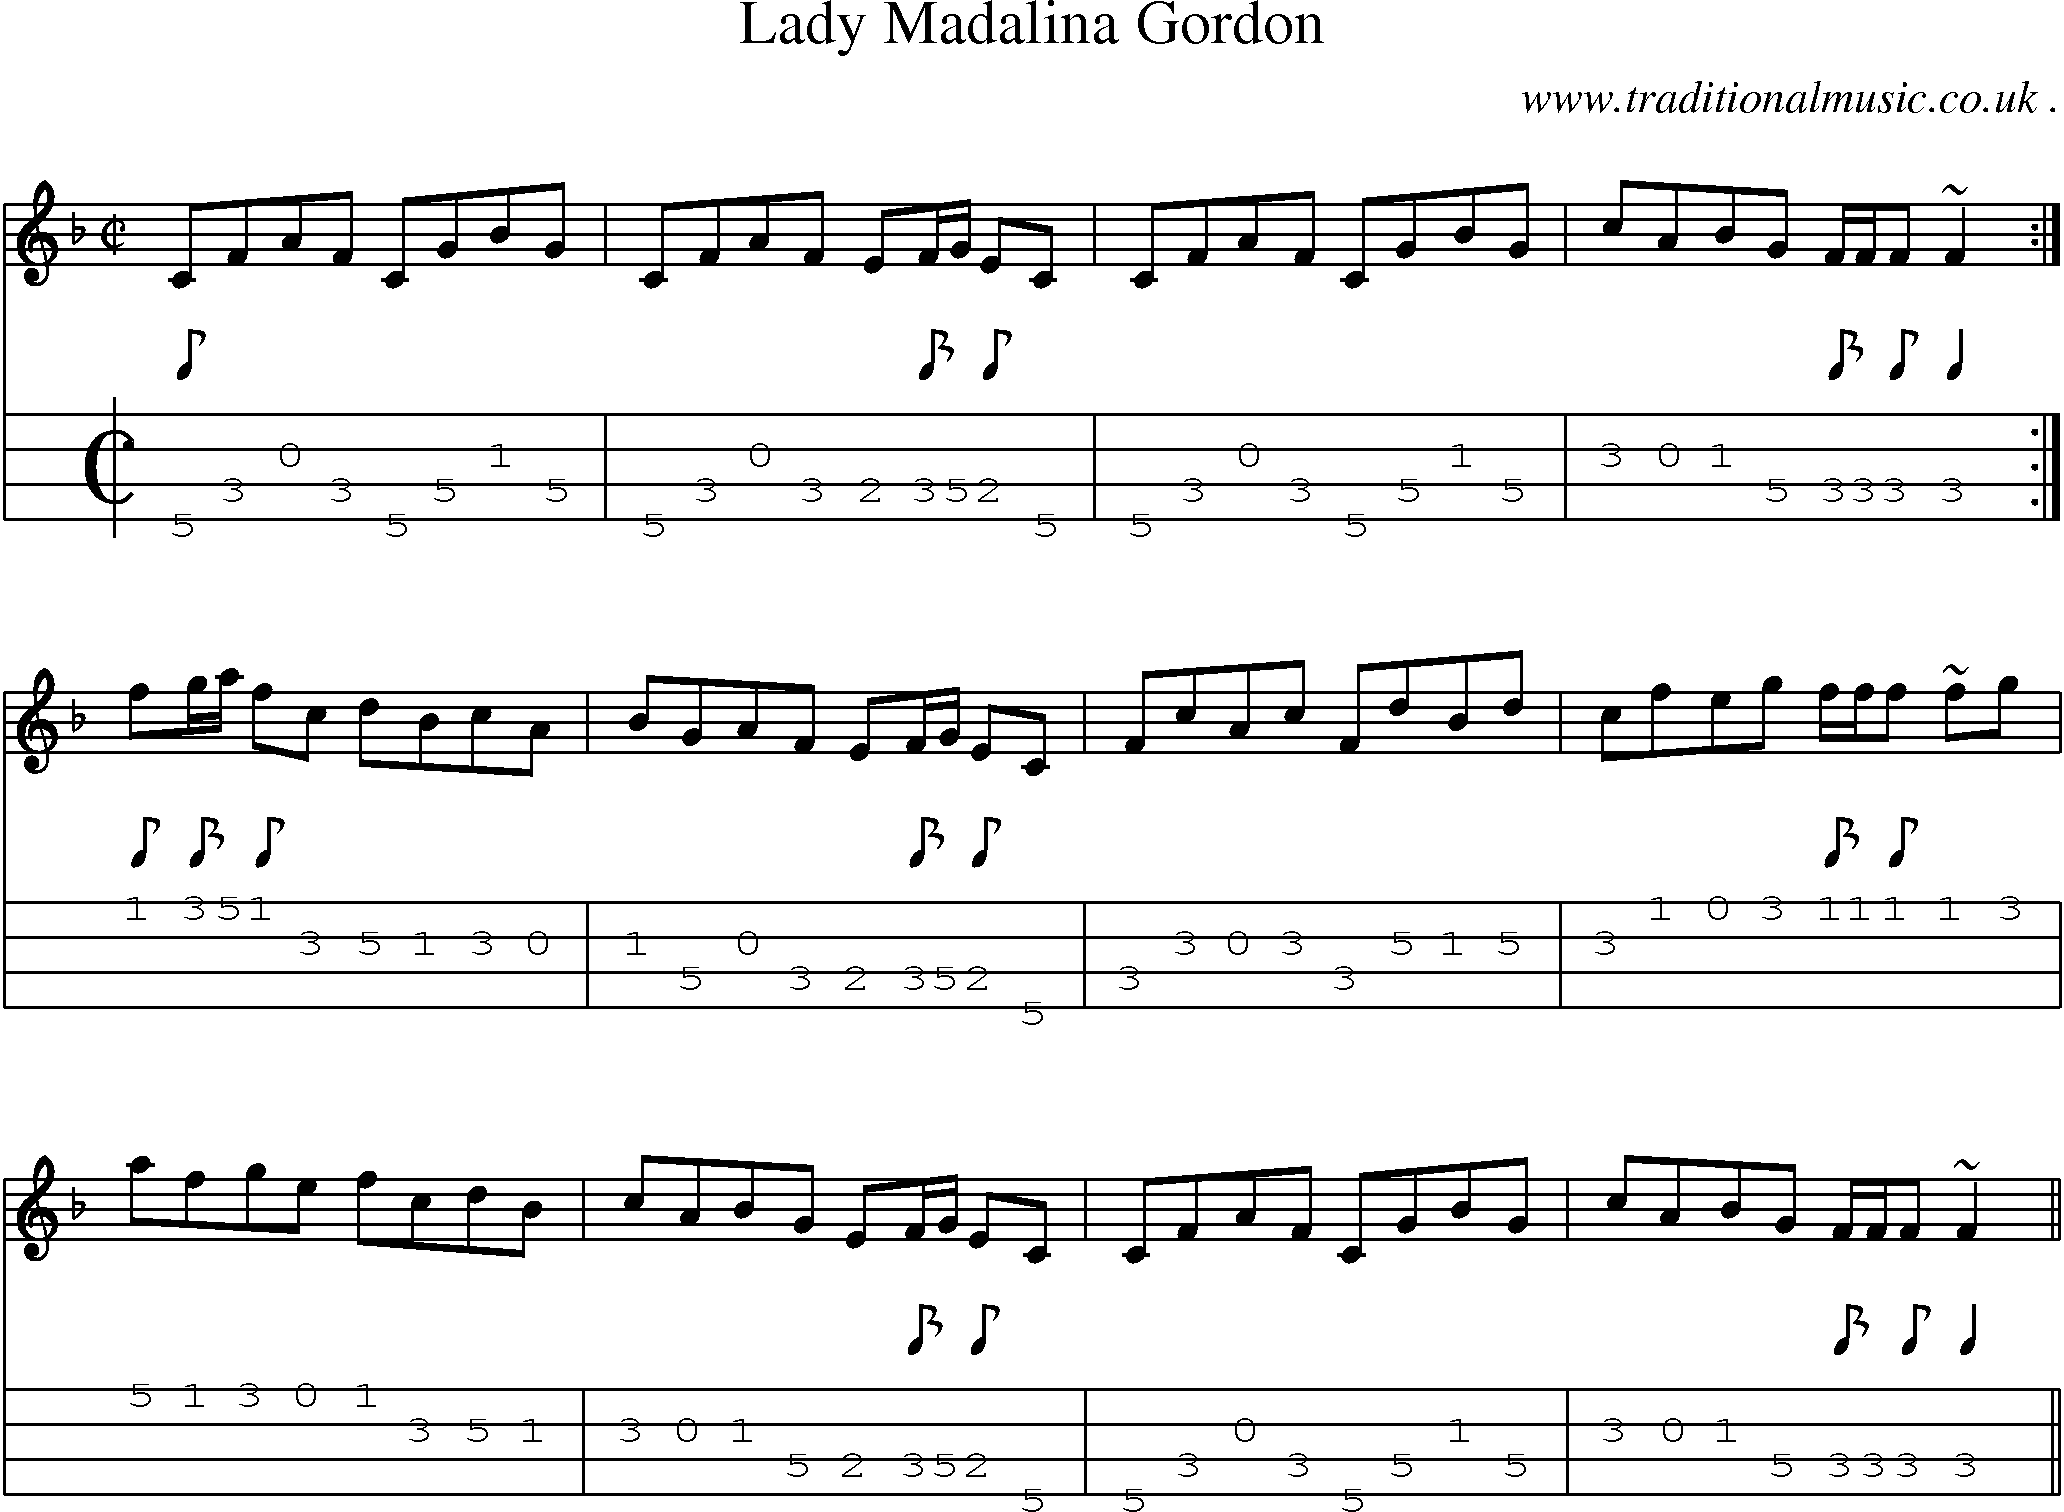 Sheet-music  score, Chords and Mandolin Tabs for Lady Madalina Gordon